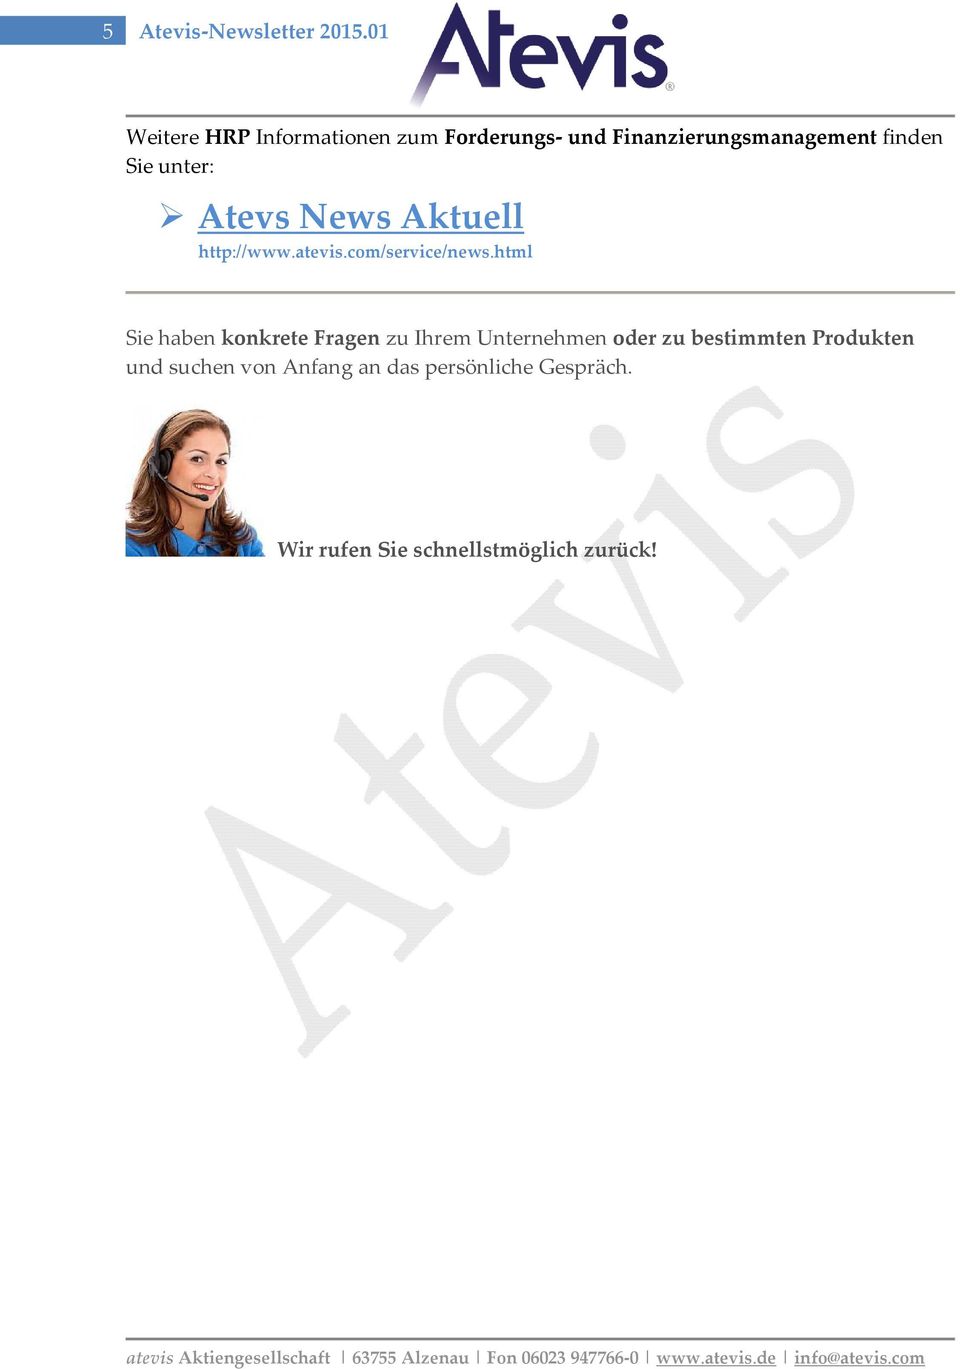 unter: Atevs News Aktuell http://www.atevis.com/service/news.